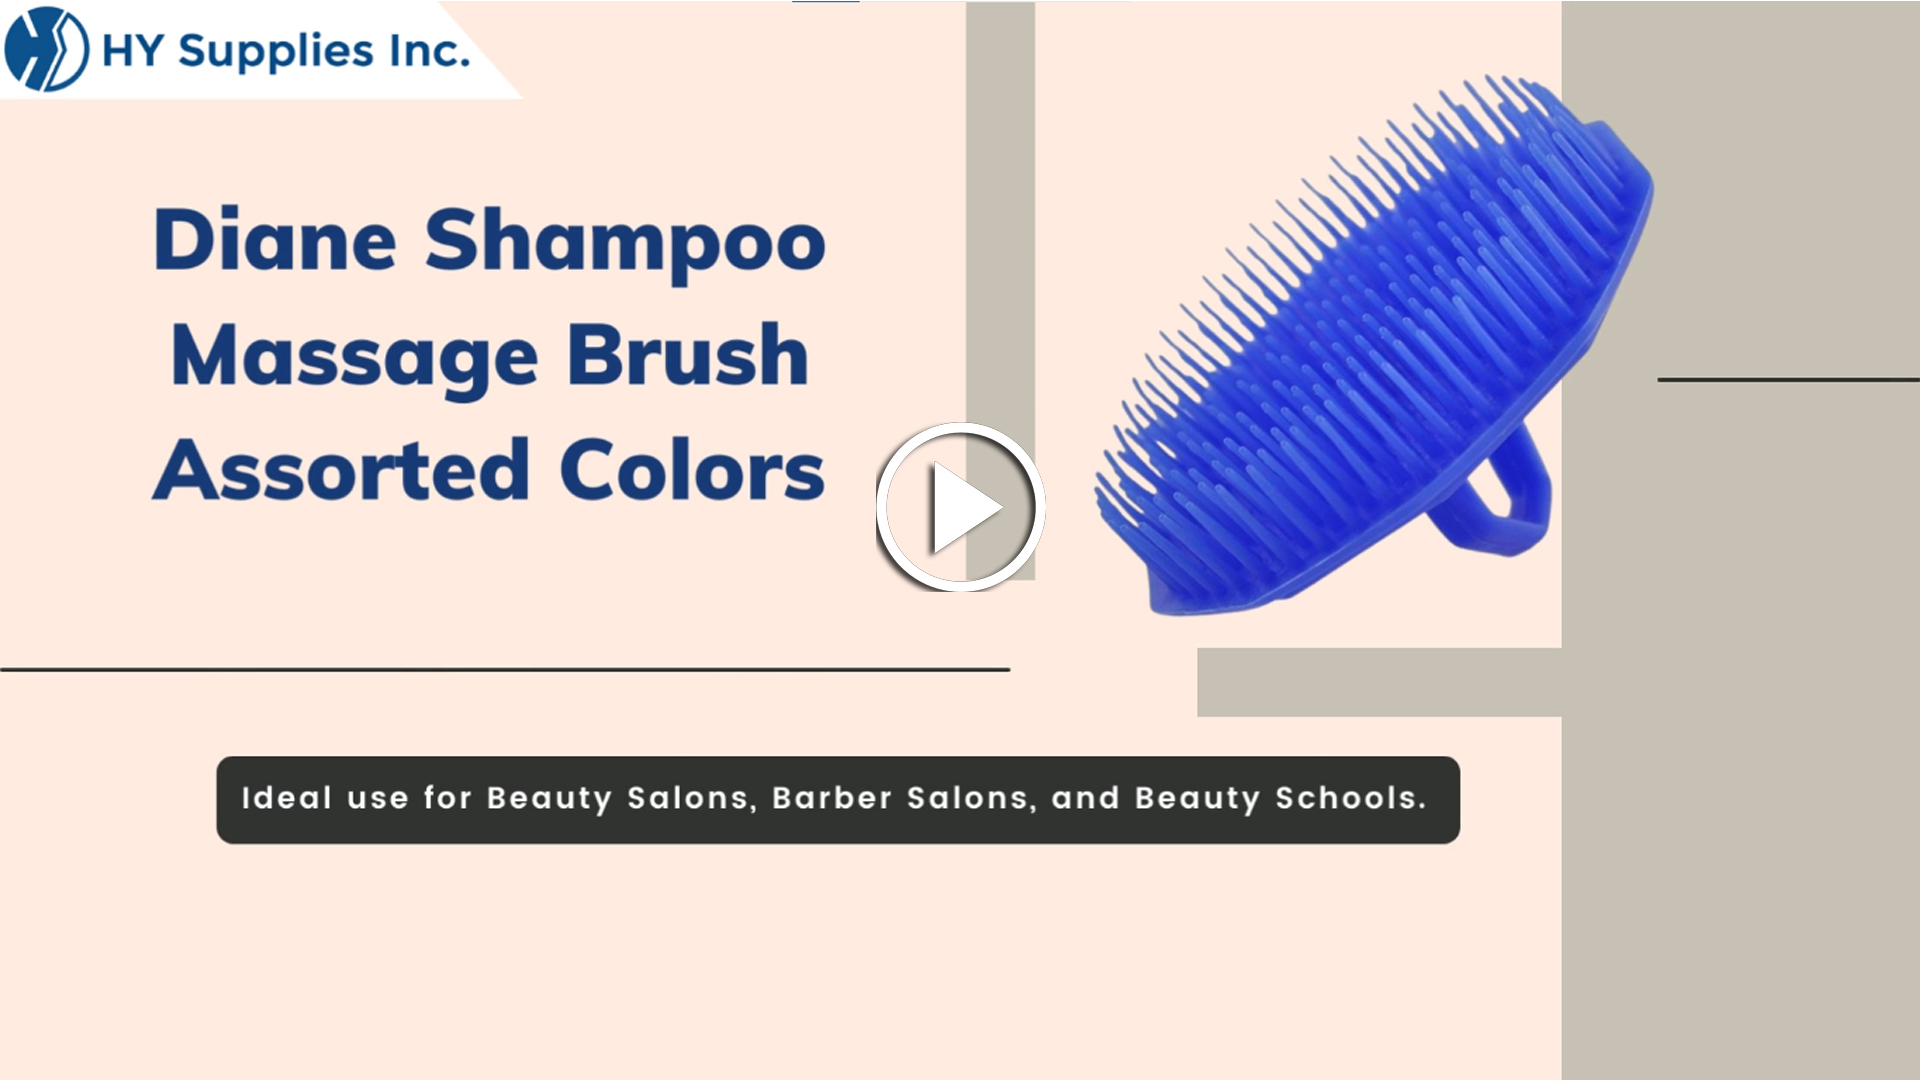 Diane Shampoo Massage Brush - Assorted Colors